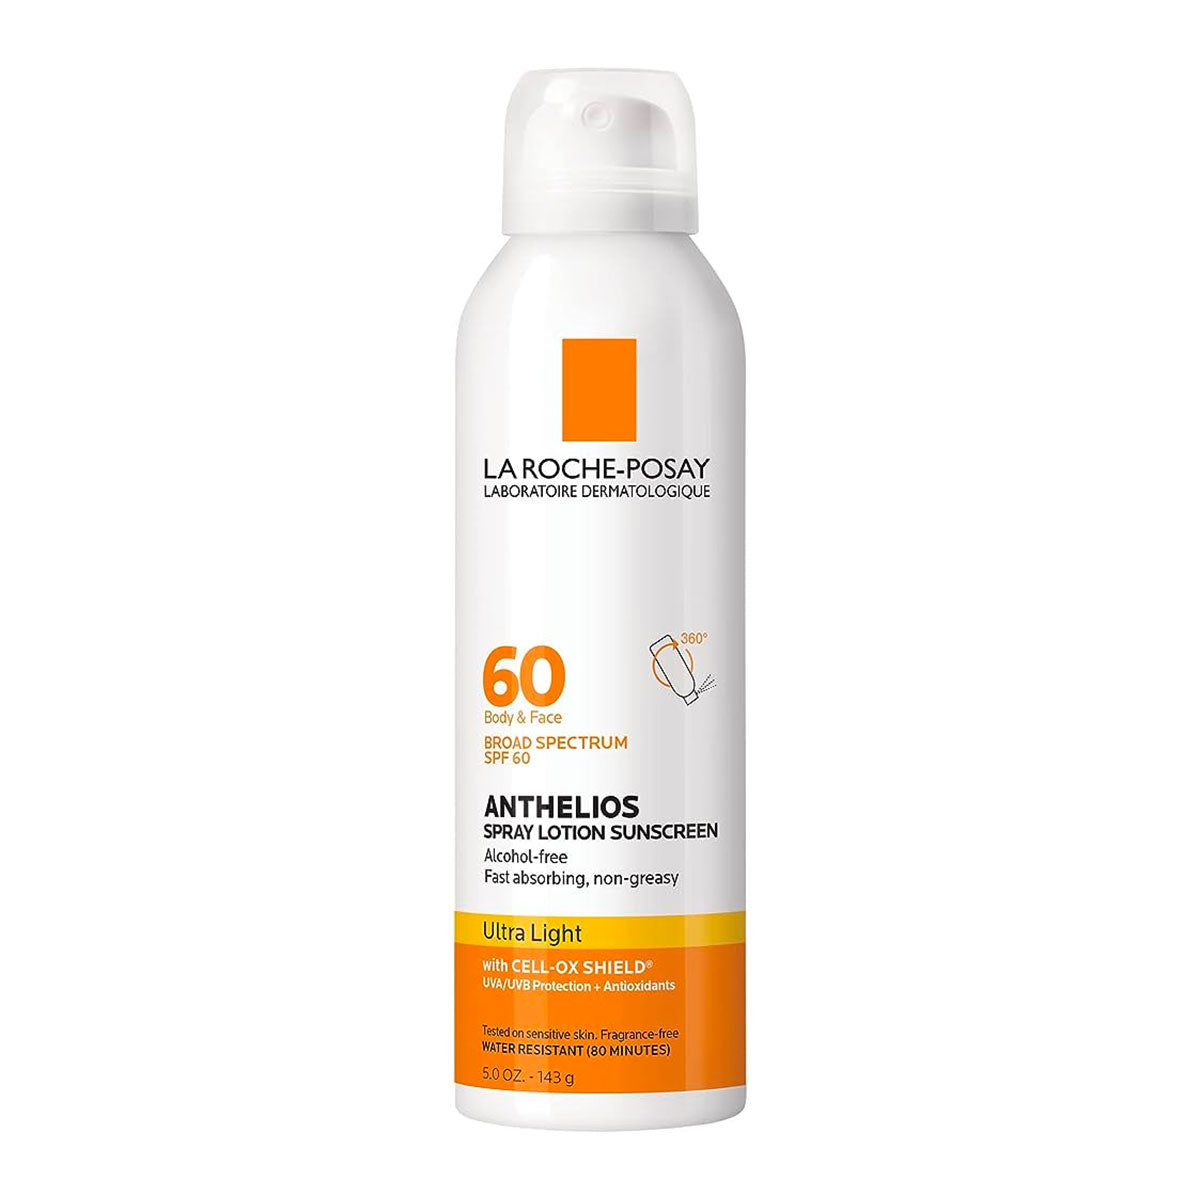 La Roche-Posay Anthelios Spray Lotion Sunscreen Ultra Light SPF 60 Body & Face 5.0 oz